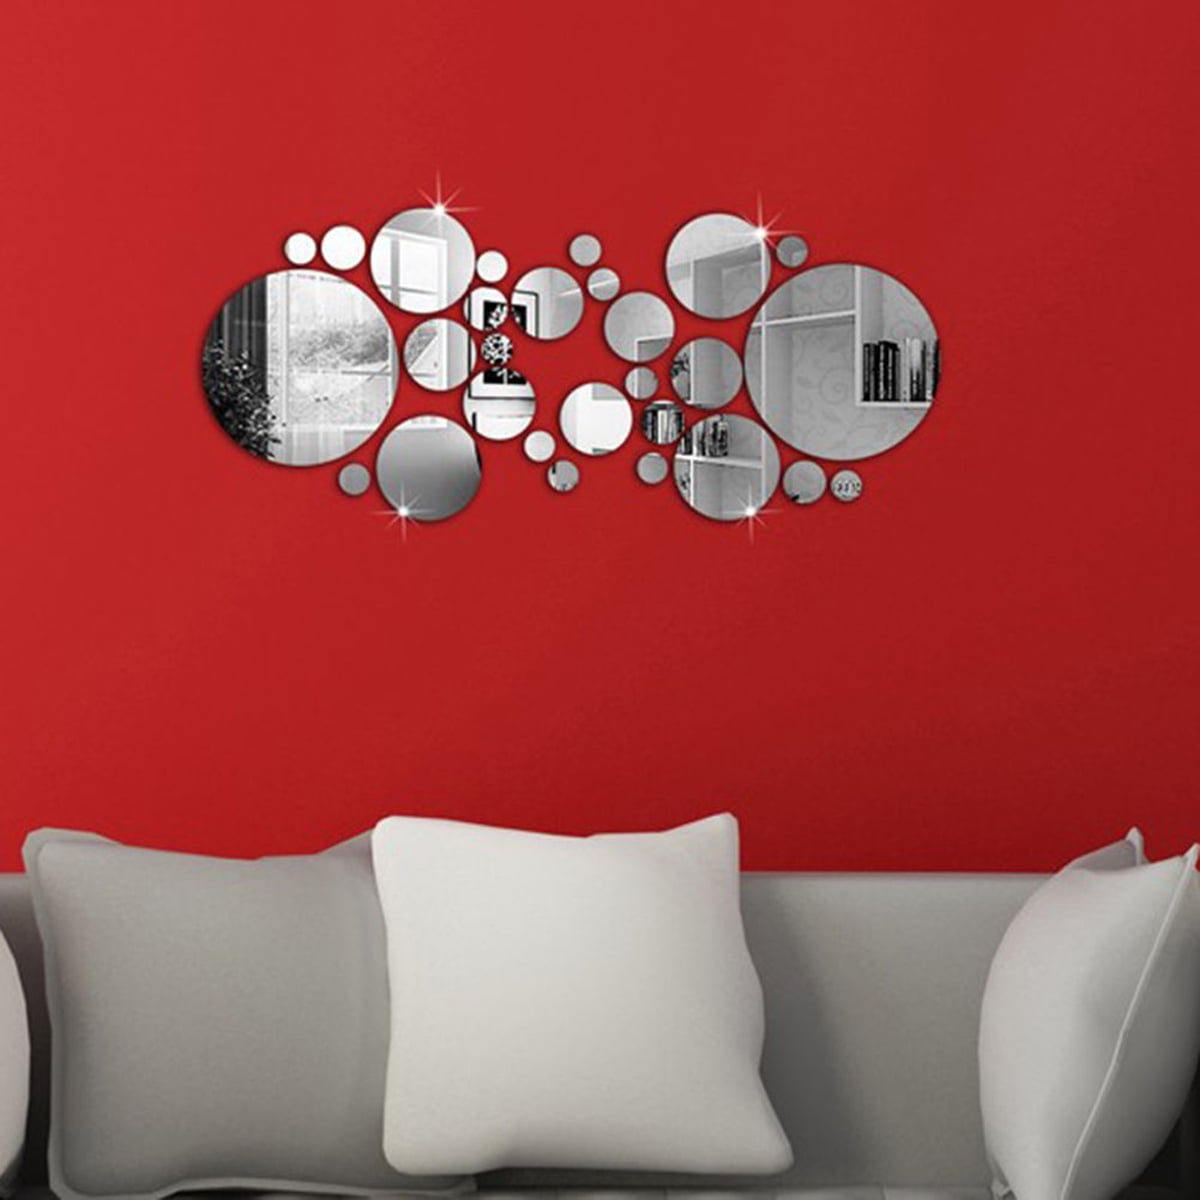 10 x 3D Acrylic Modern Mirror Decal Mural Wall Sticker Home Decor Removable DIY